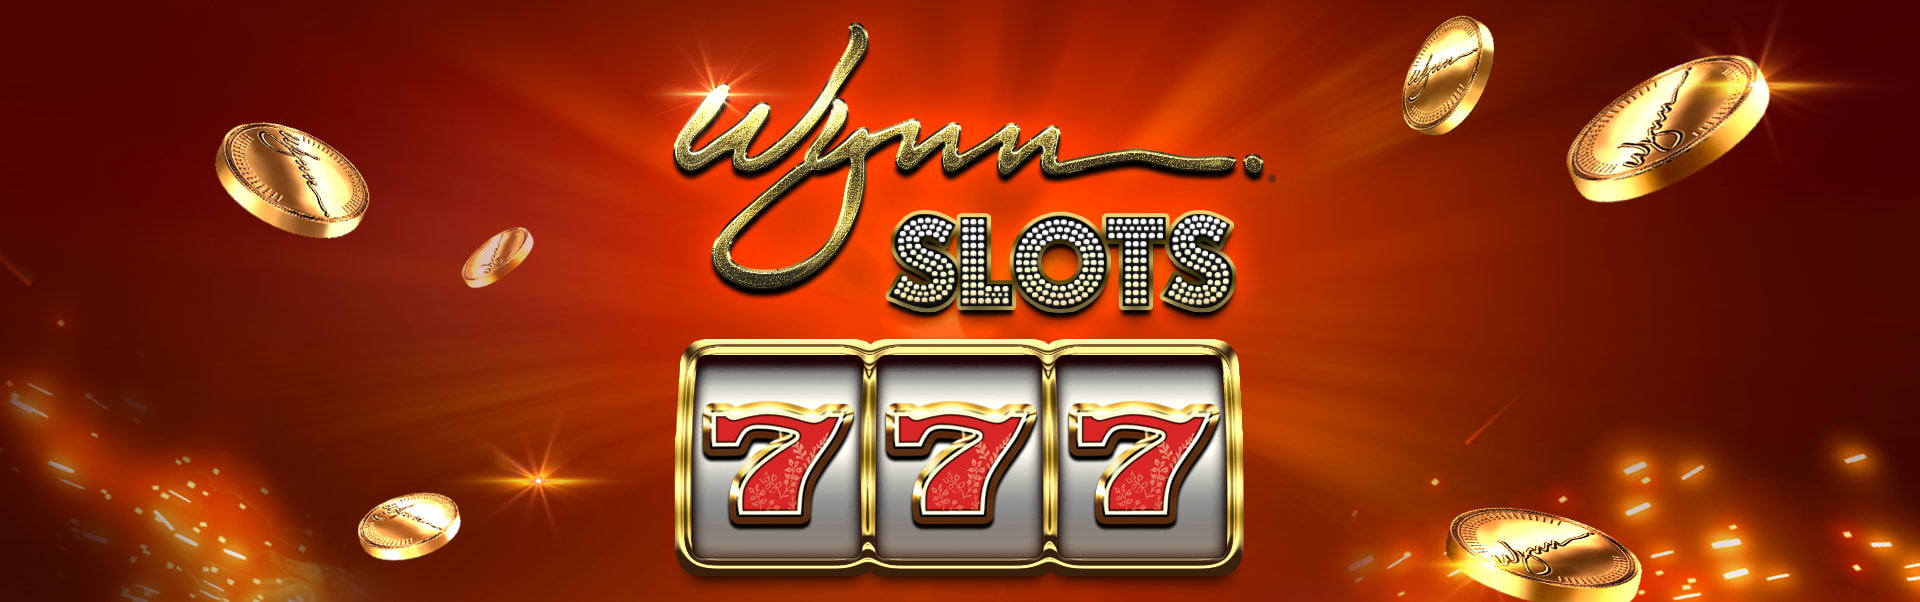 Wynn casino free slots